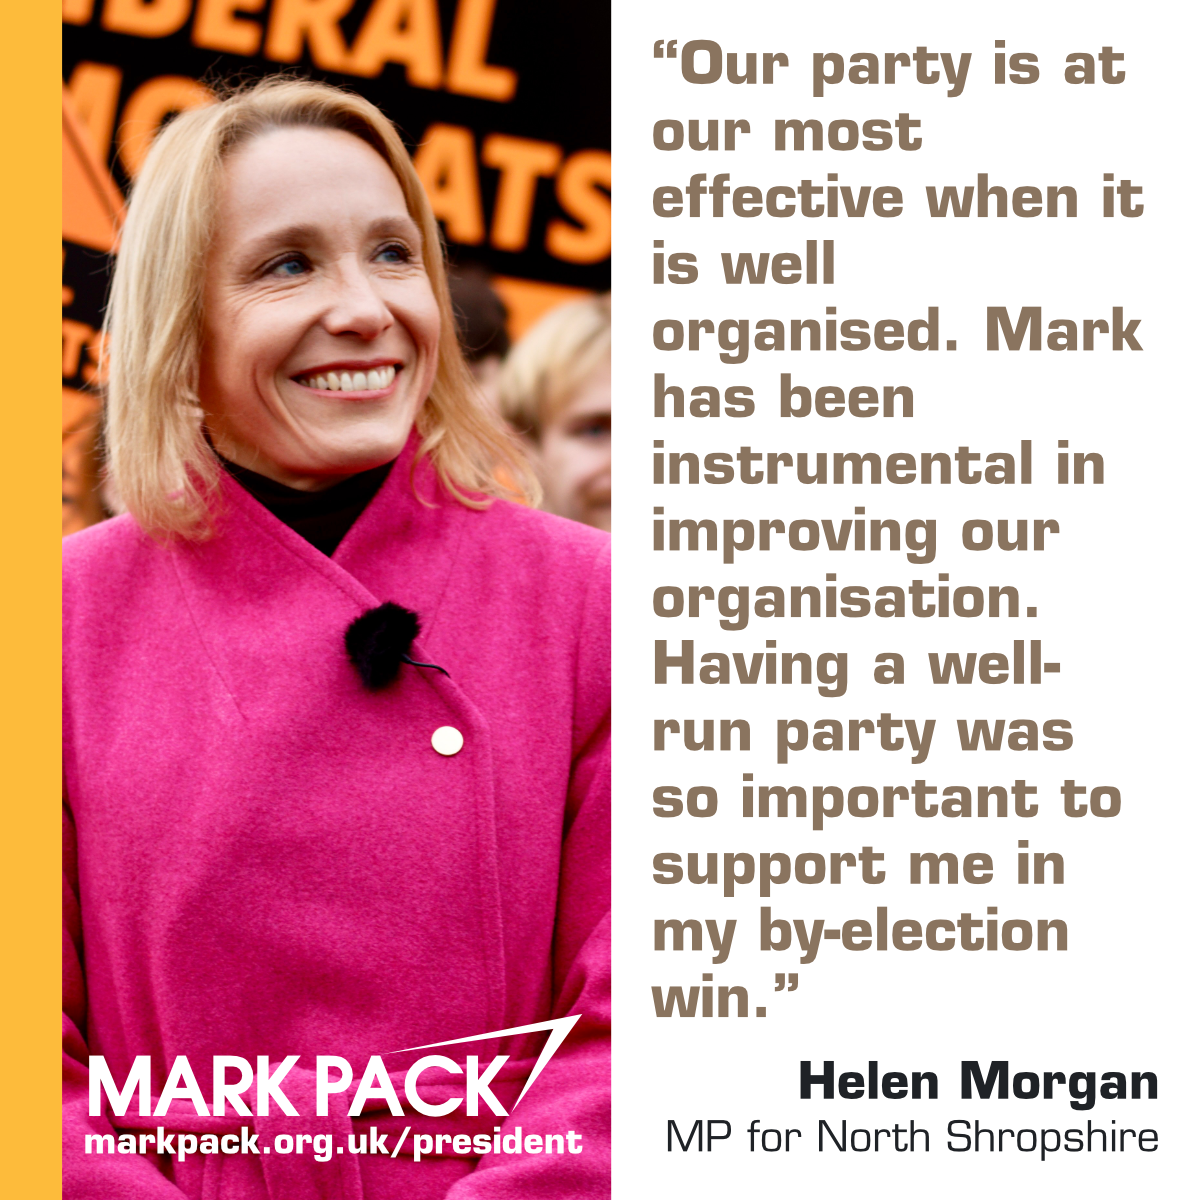 Helen Morgan endorses Mark Pack